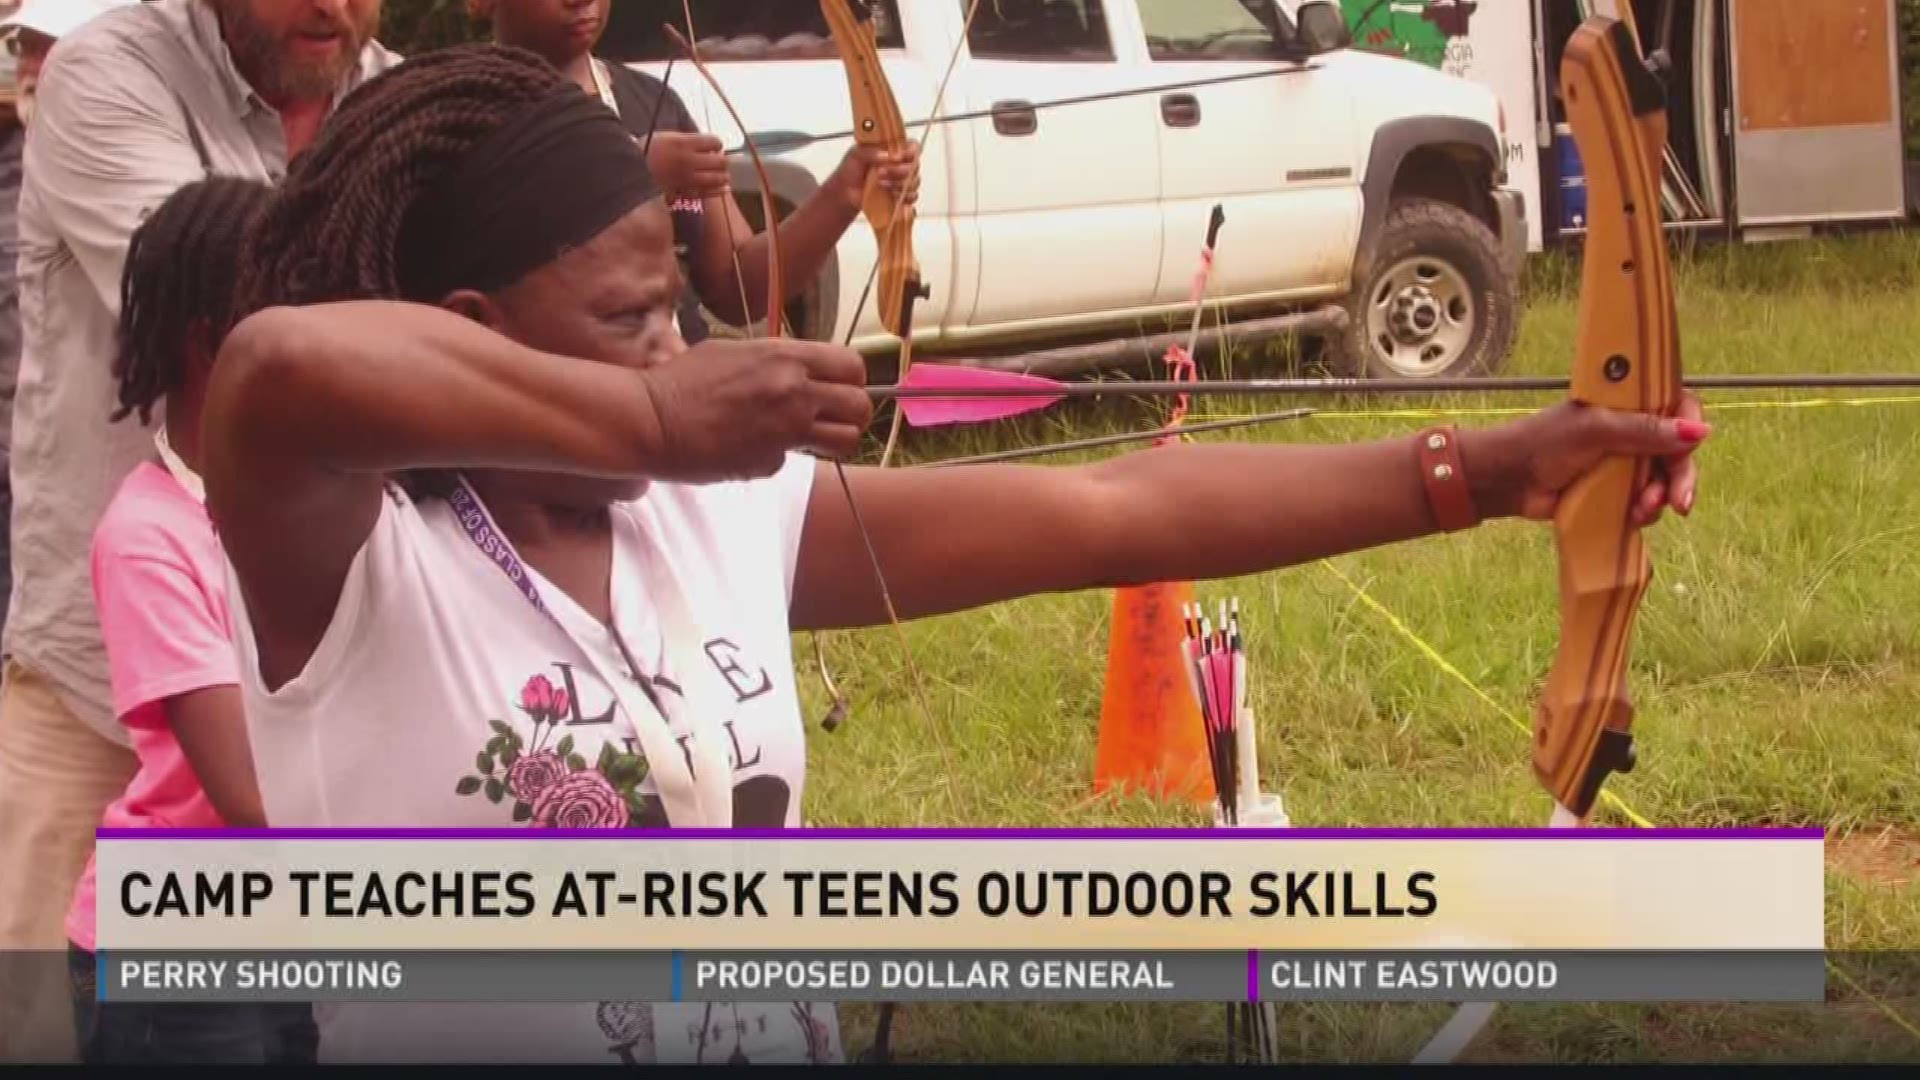 Camp teaches at-risk children outdoor skills